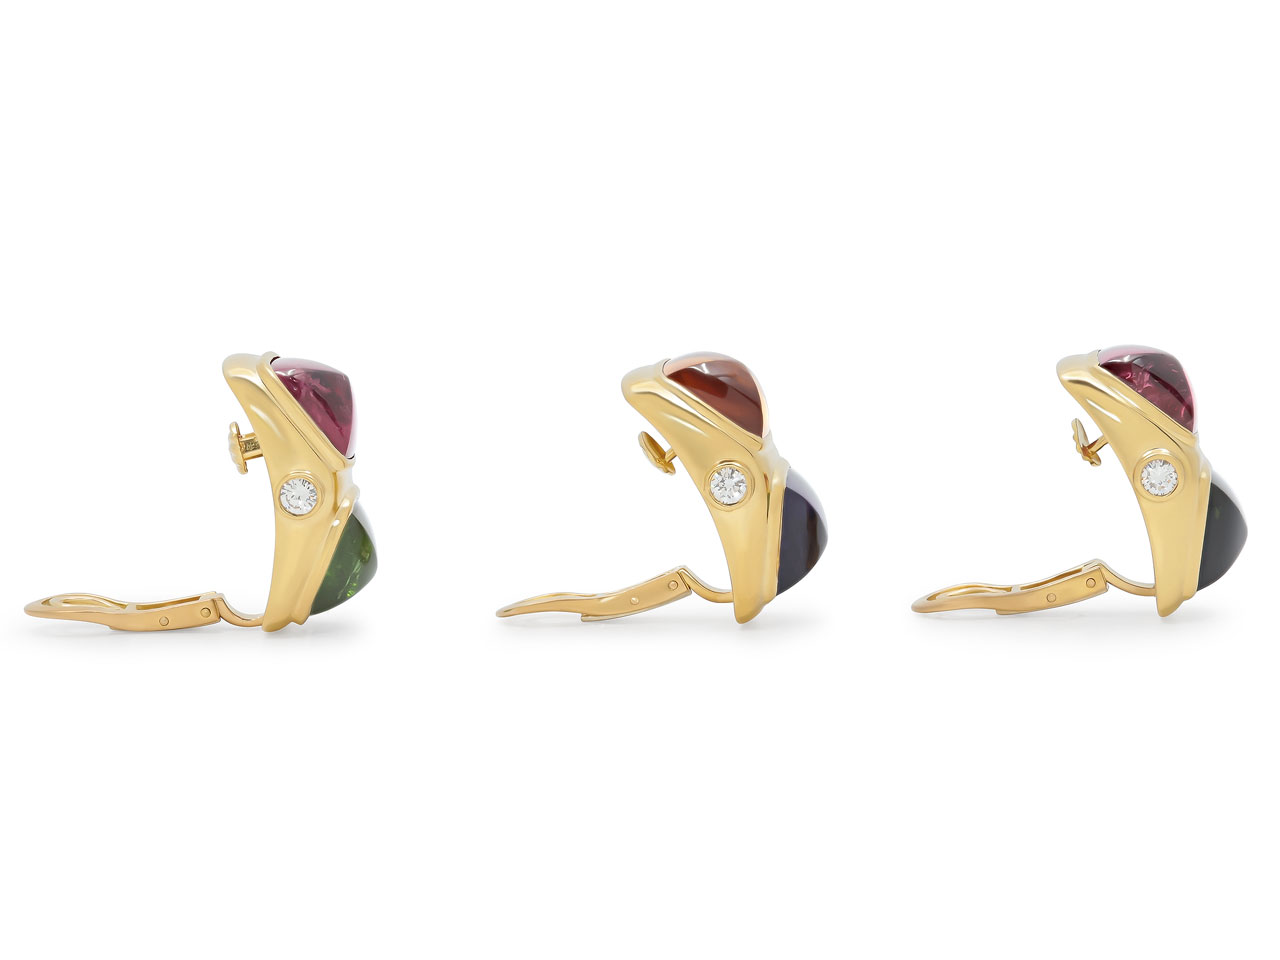 Set of Three Multi-Gemstone and Diamond Earrings in 18K Gold